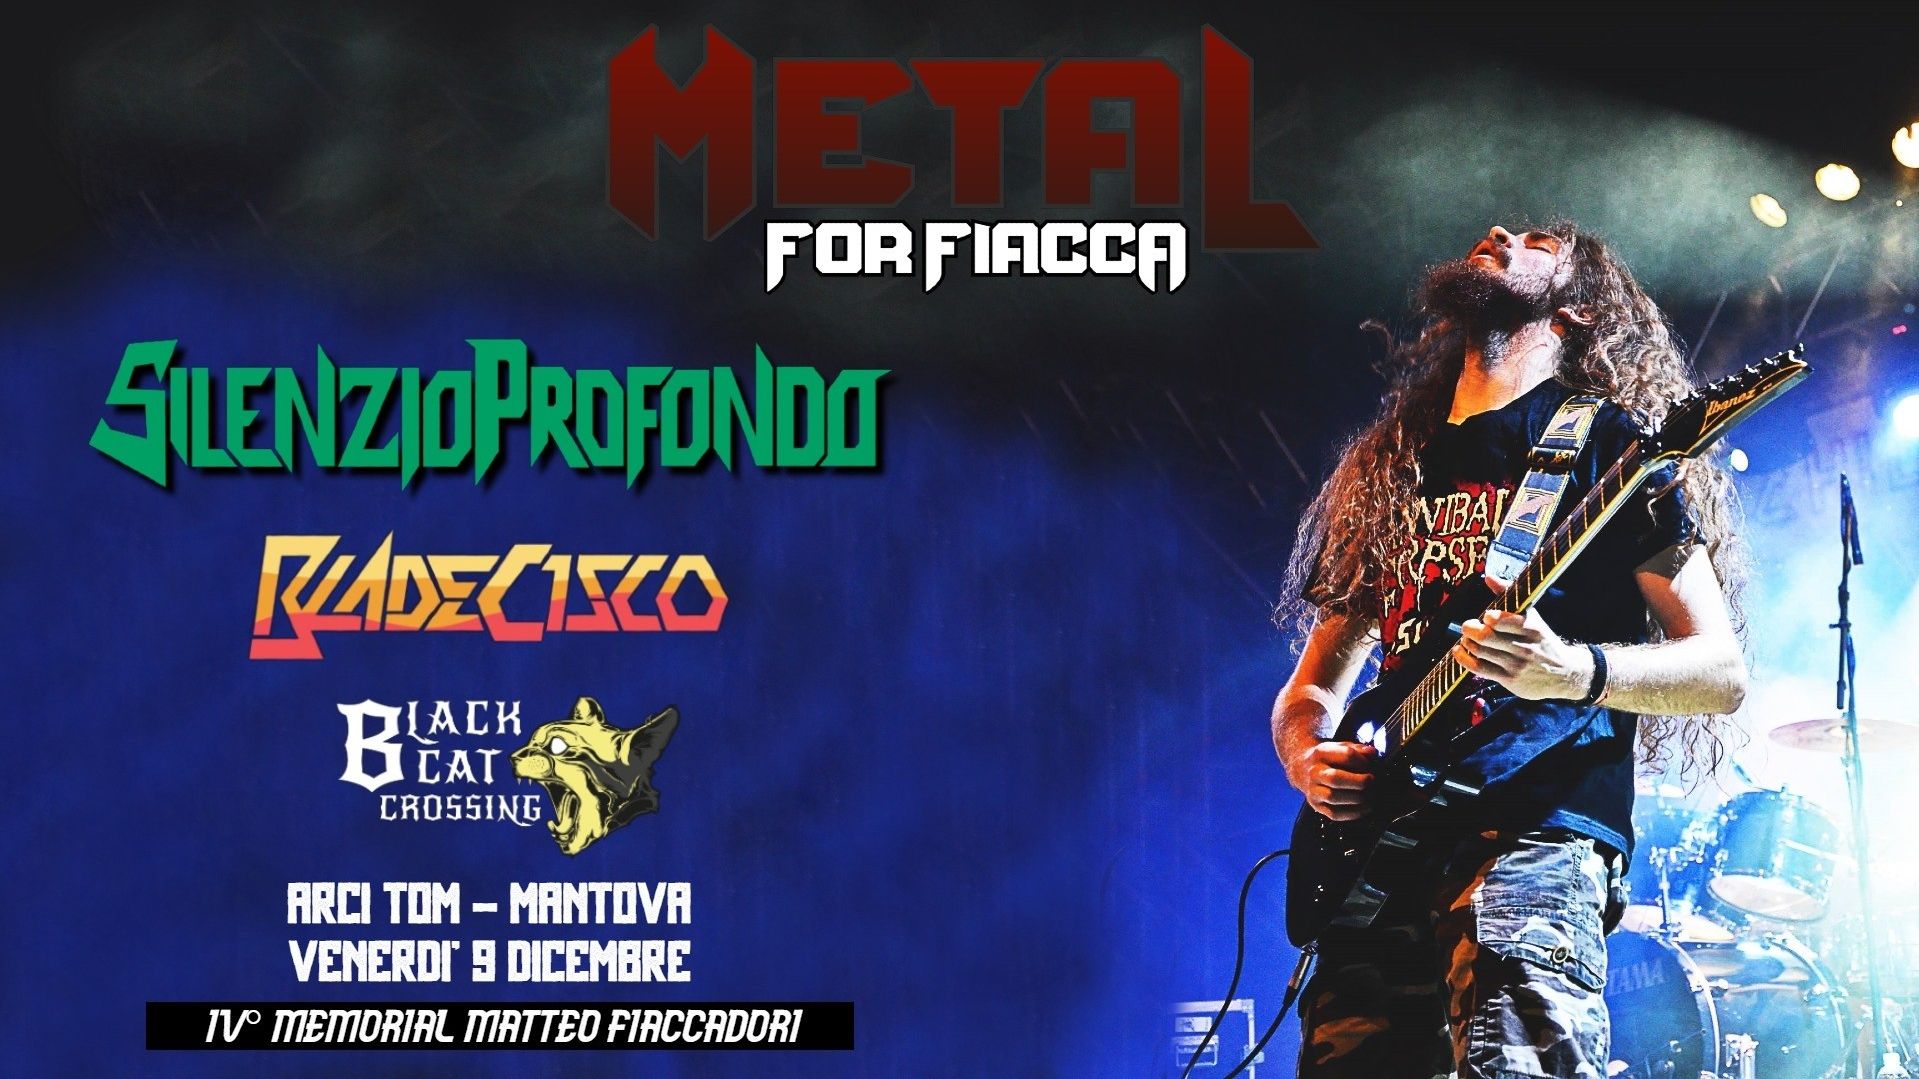 Metal For Fiacca - Silenzio Profondo + Blade Cisco